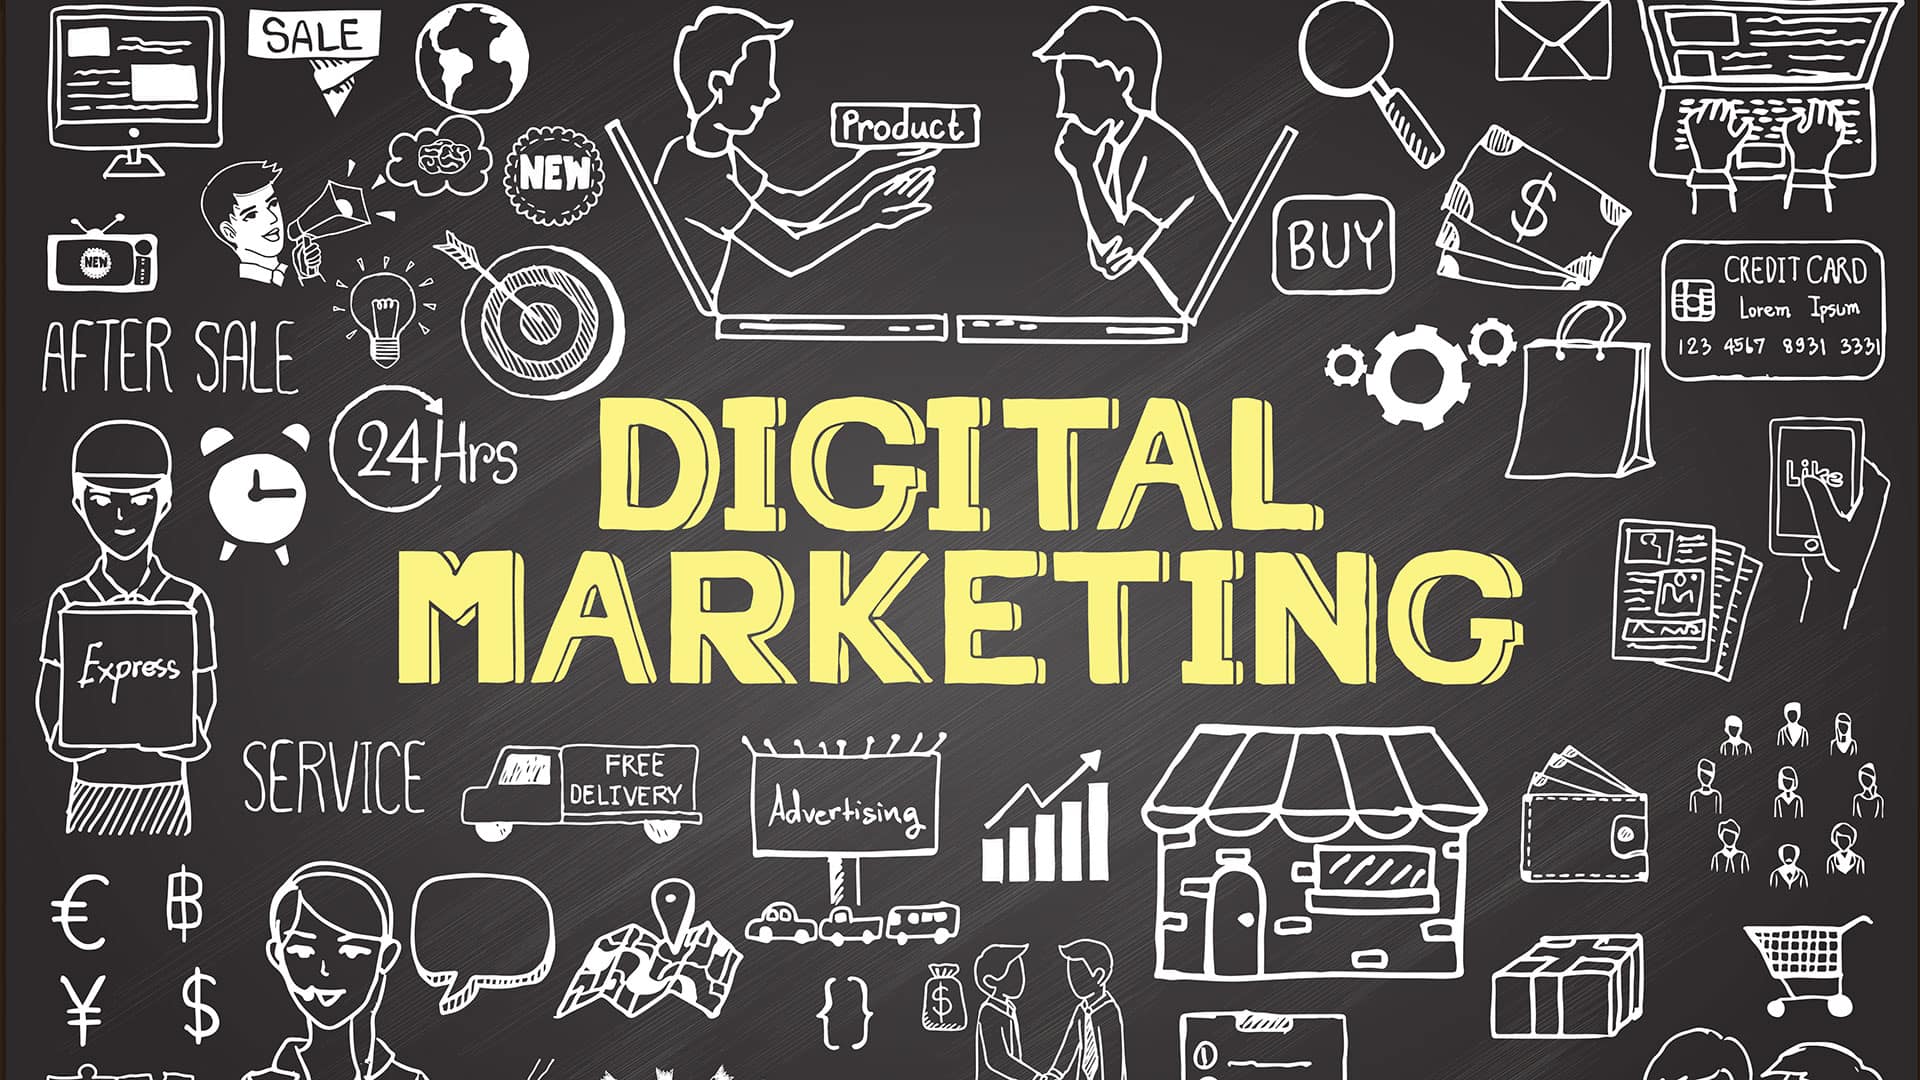 Digital Marketing Metrics to Keep an Eye On